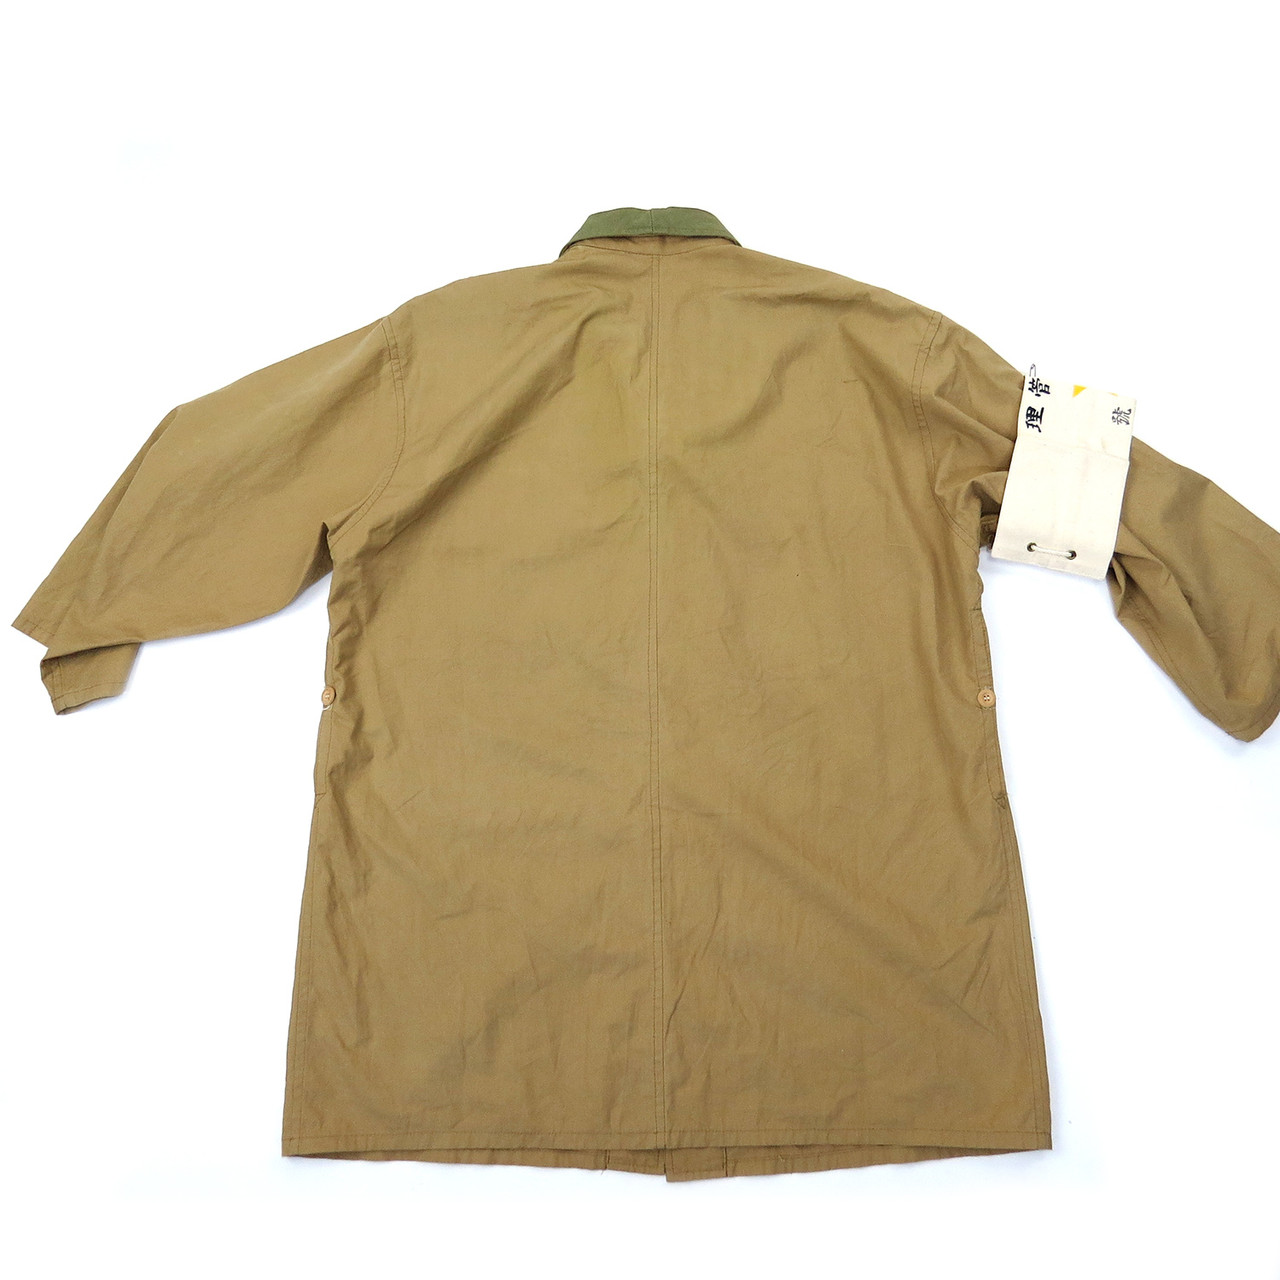 Japanese Army Summer Uniform Shirt (Large)